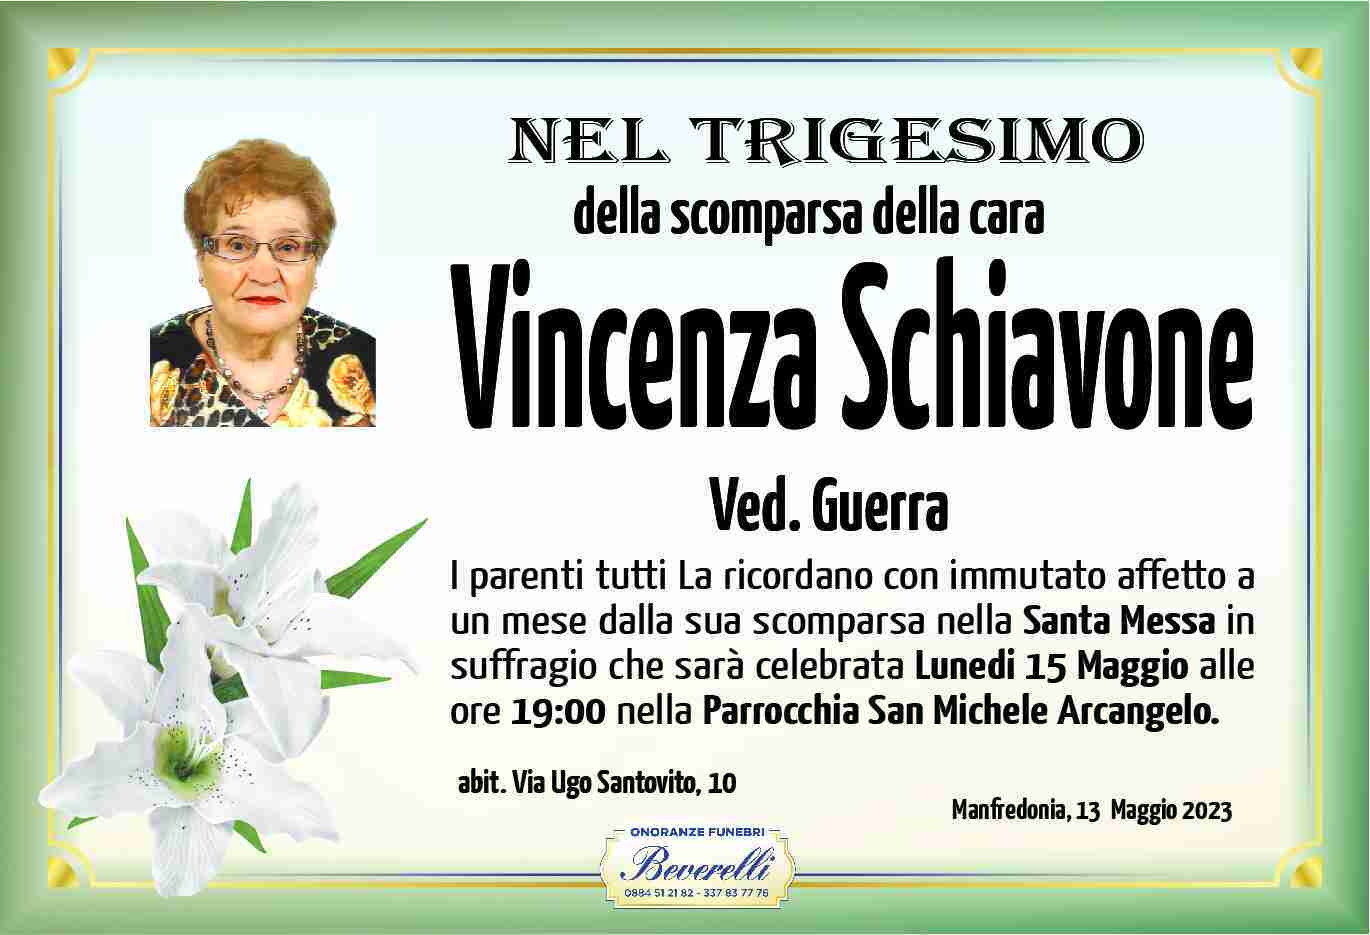 Vincenza Schiavone